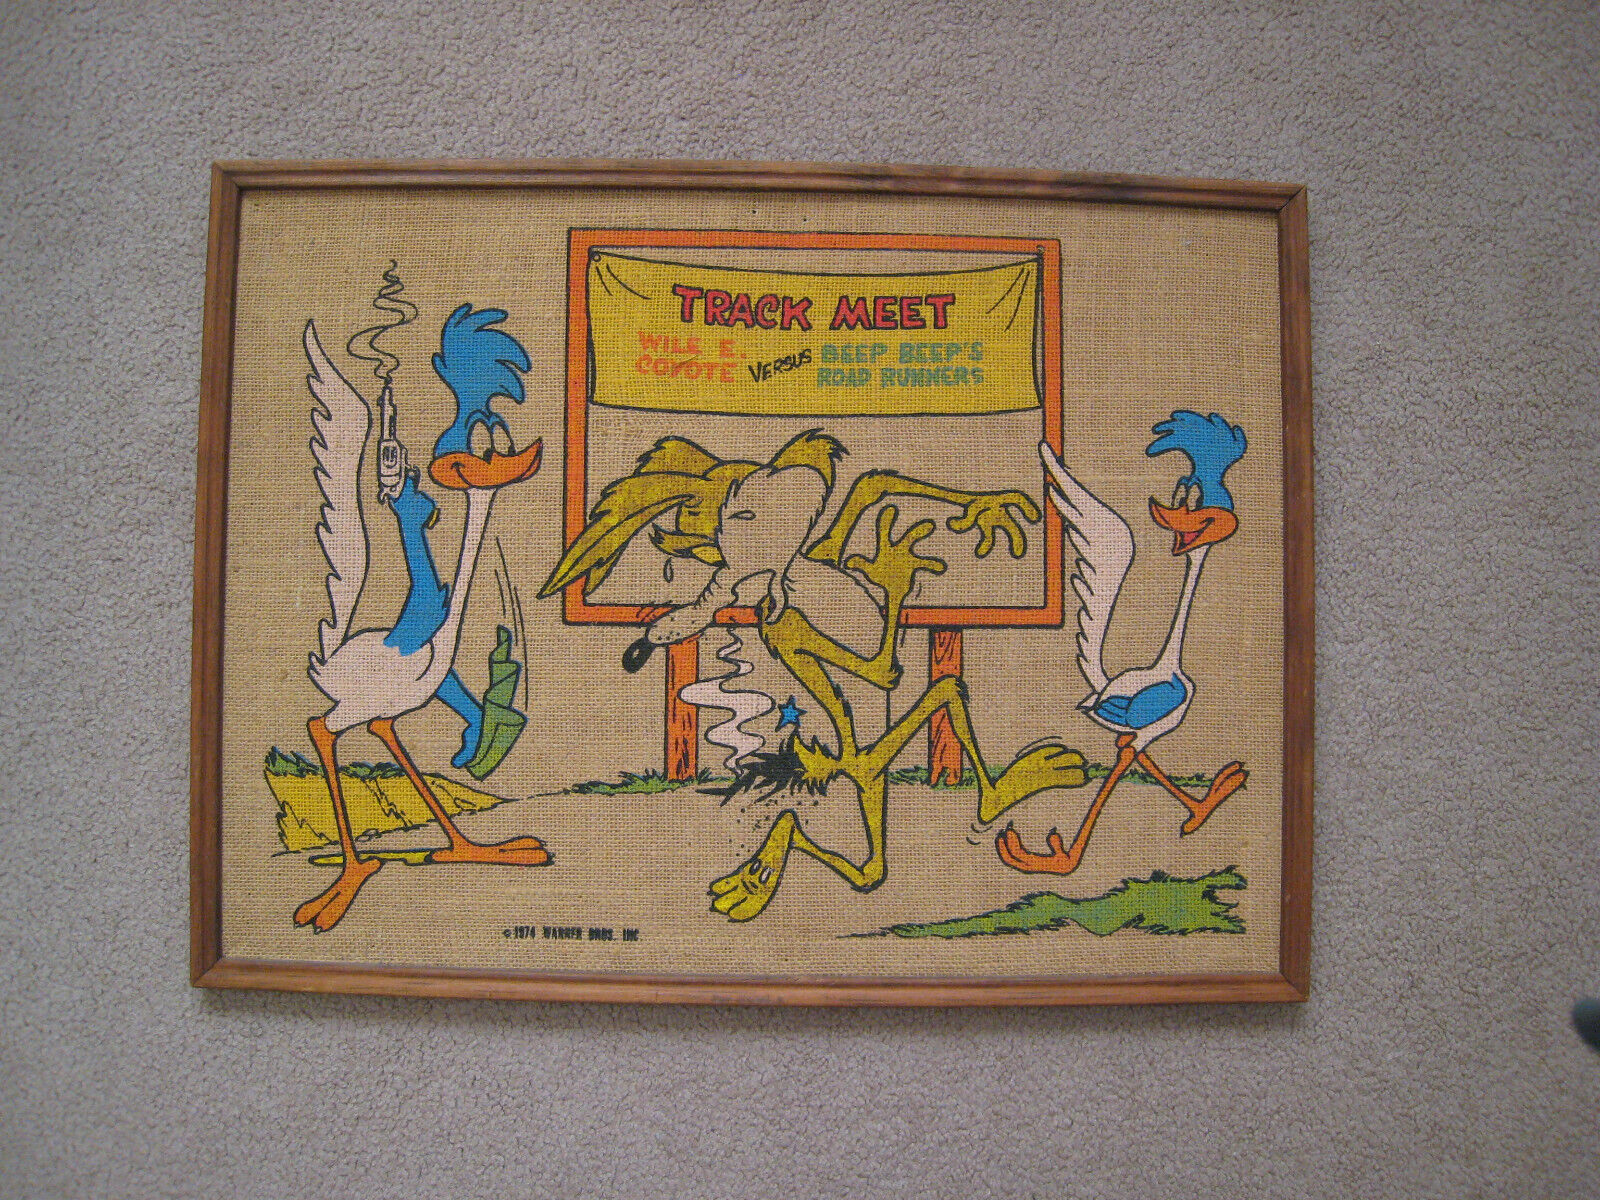 VTG Warner Bros Looney Tunes Wile E Coyote Vs Road Runner Burlap Bulletin Art